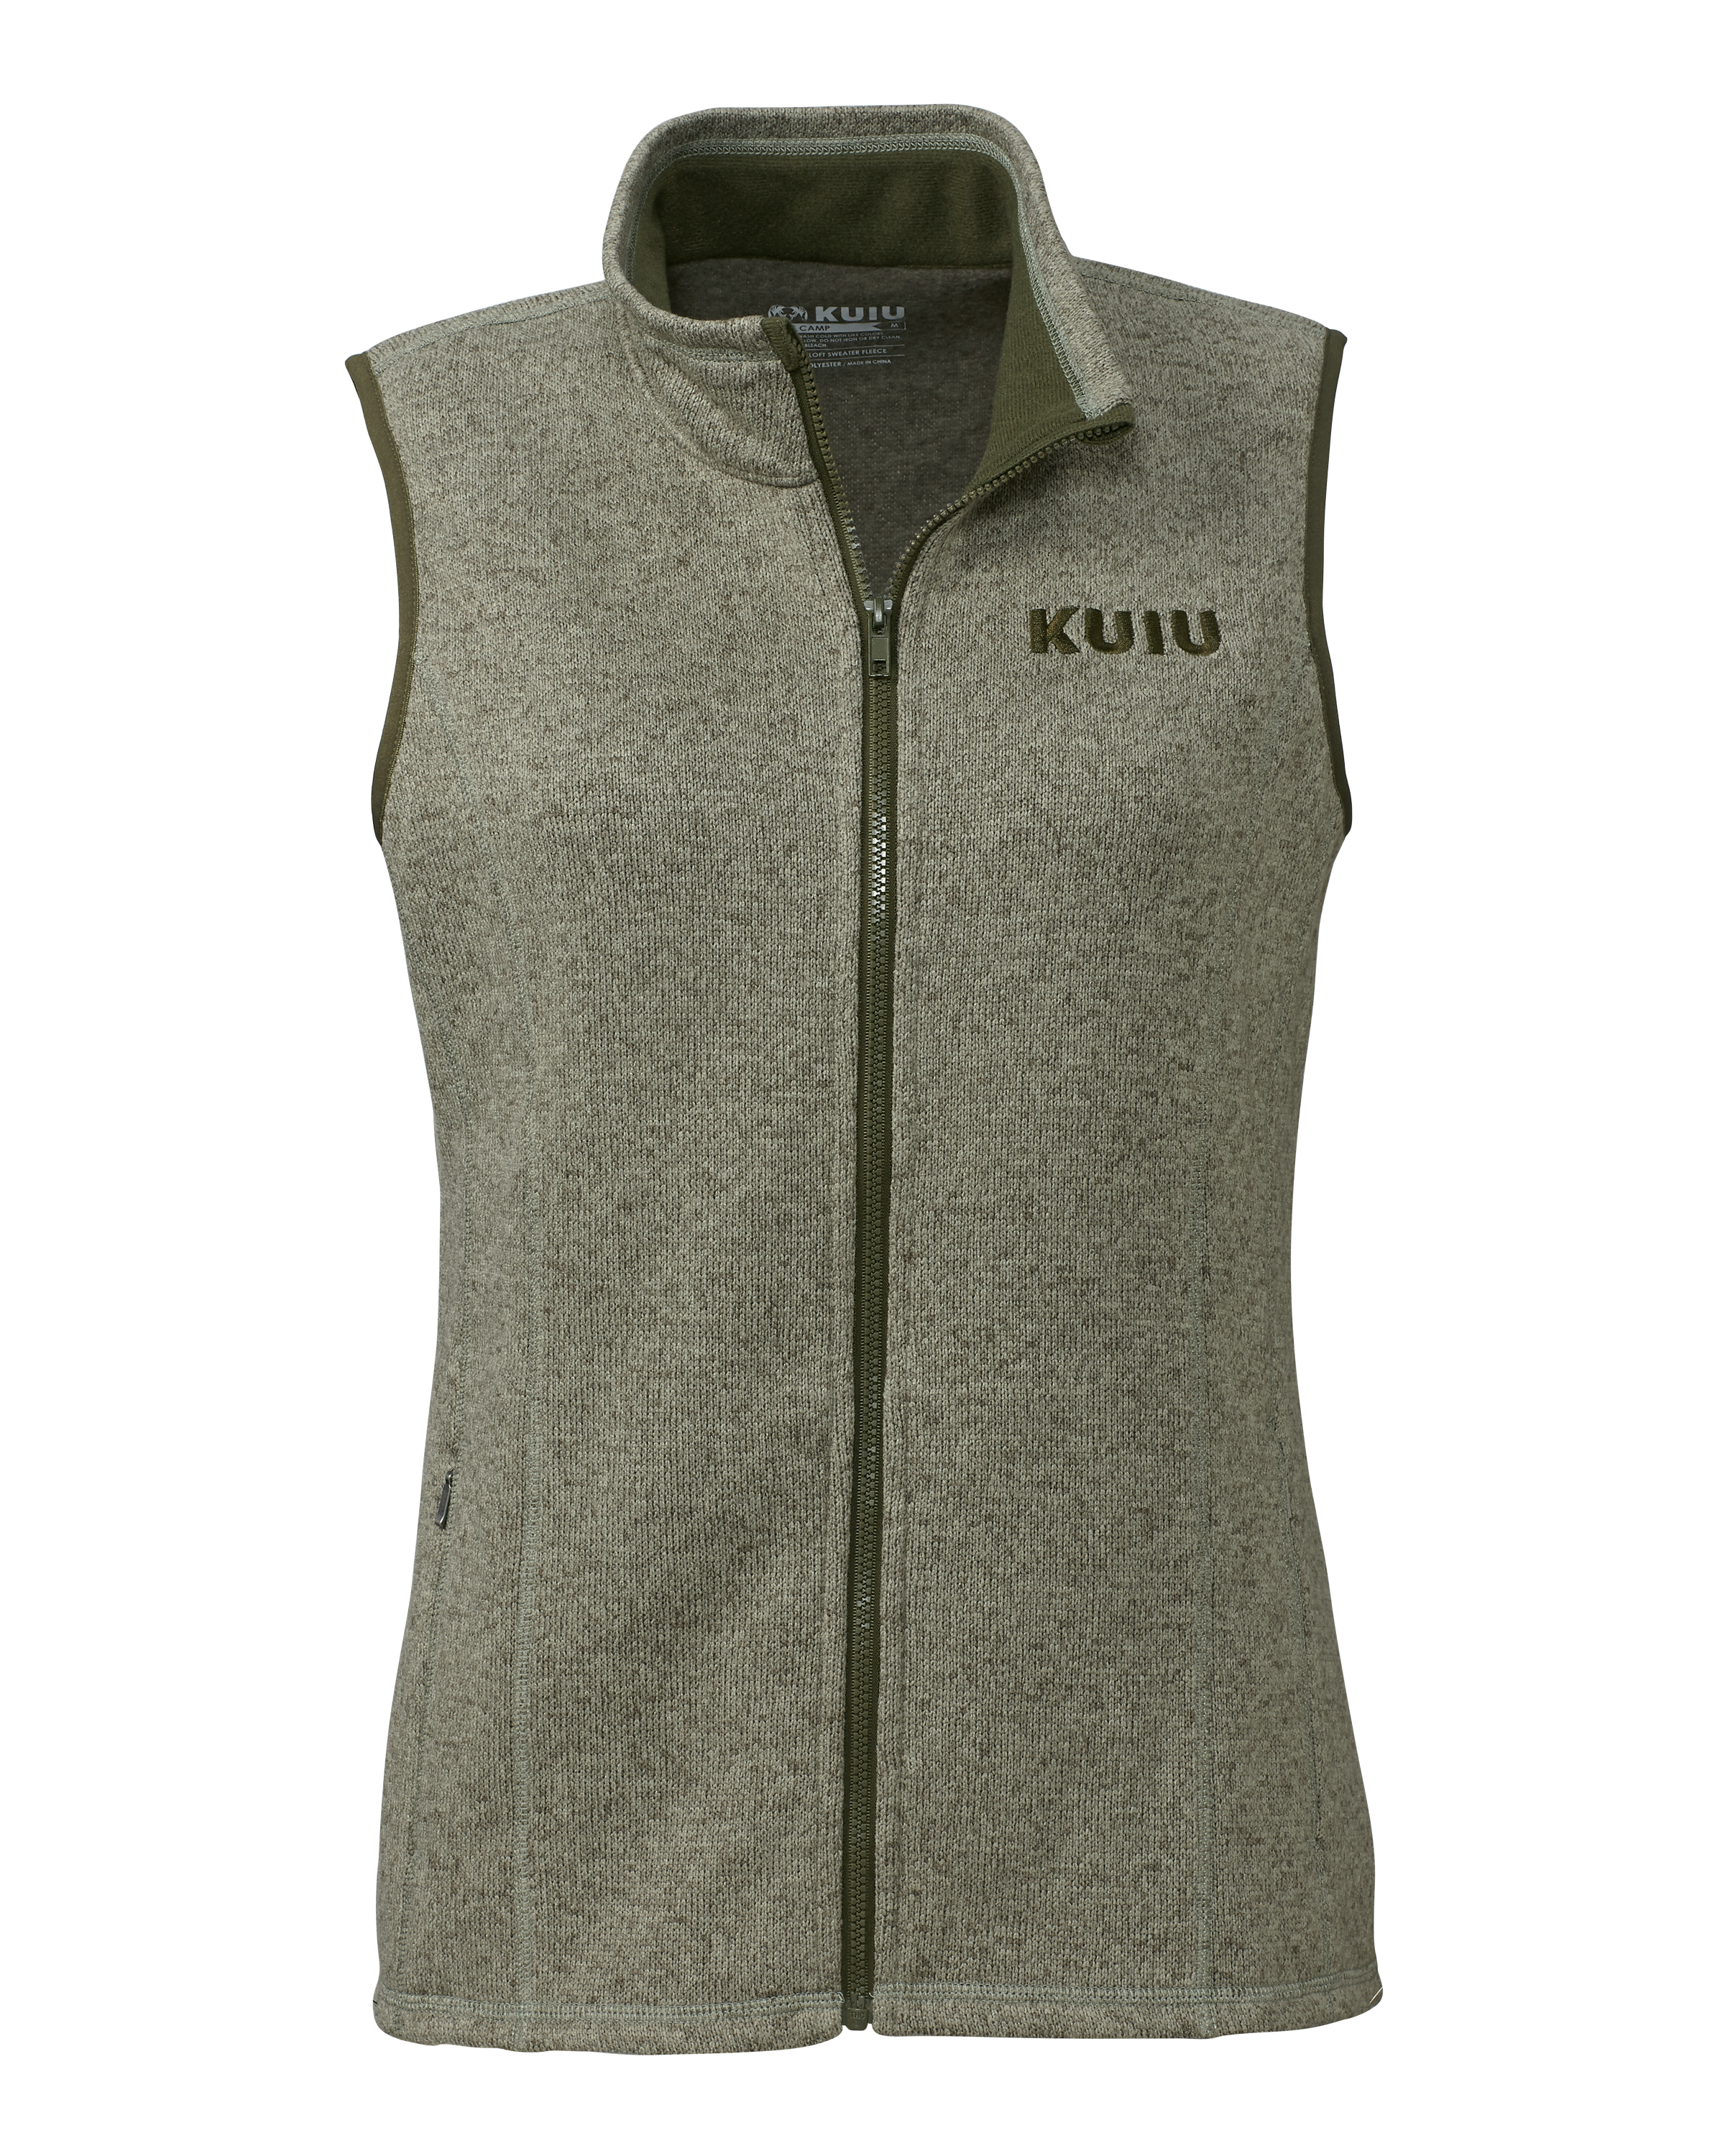 KUIU Outlet Women's Base Camp Sweater Vest in Heather Olive | Medium